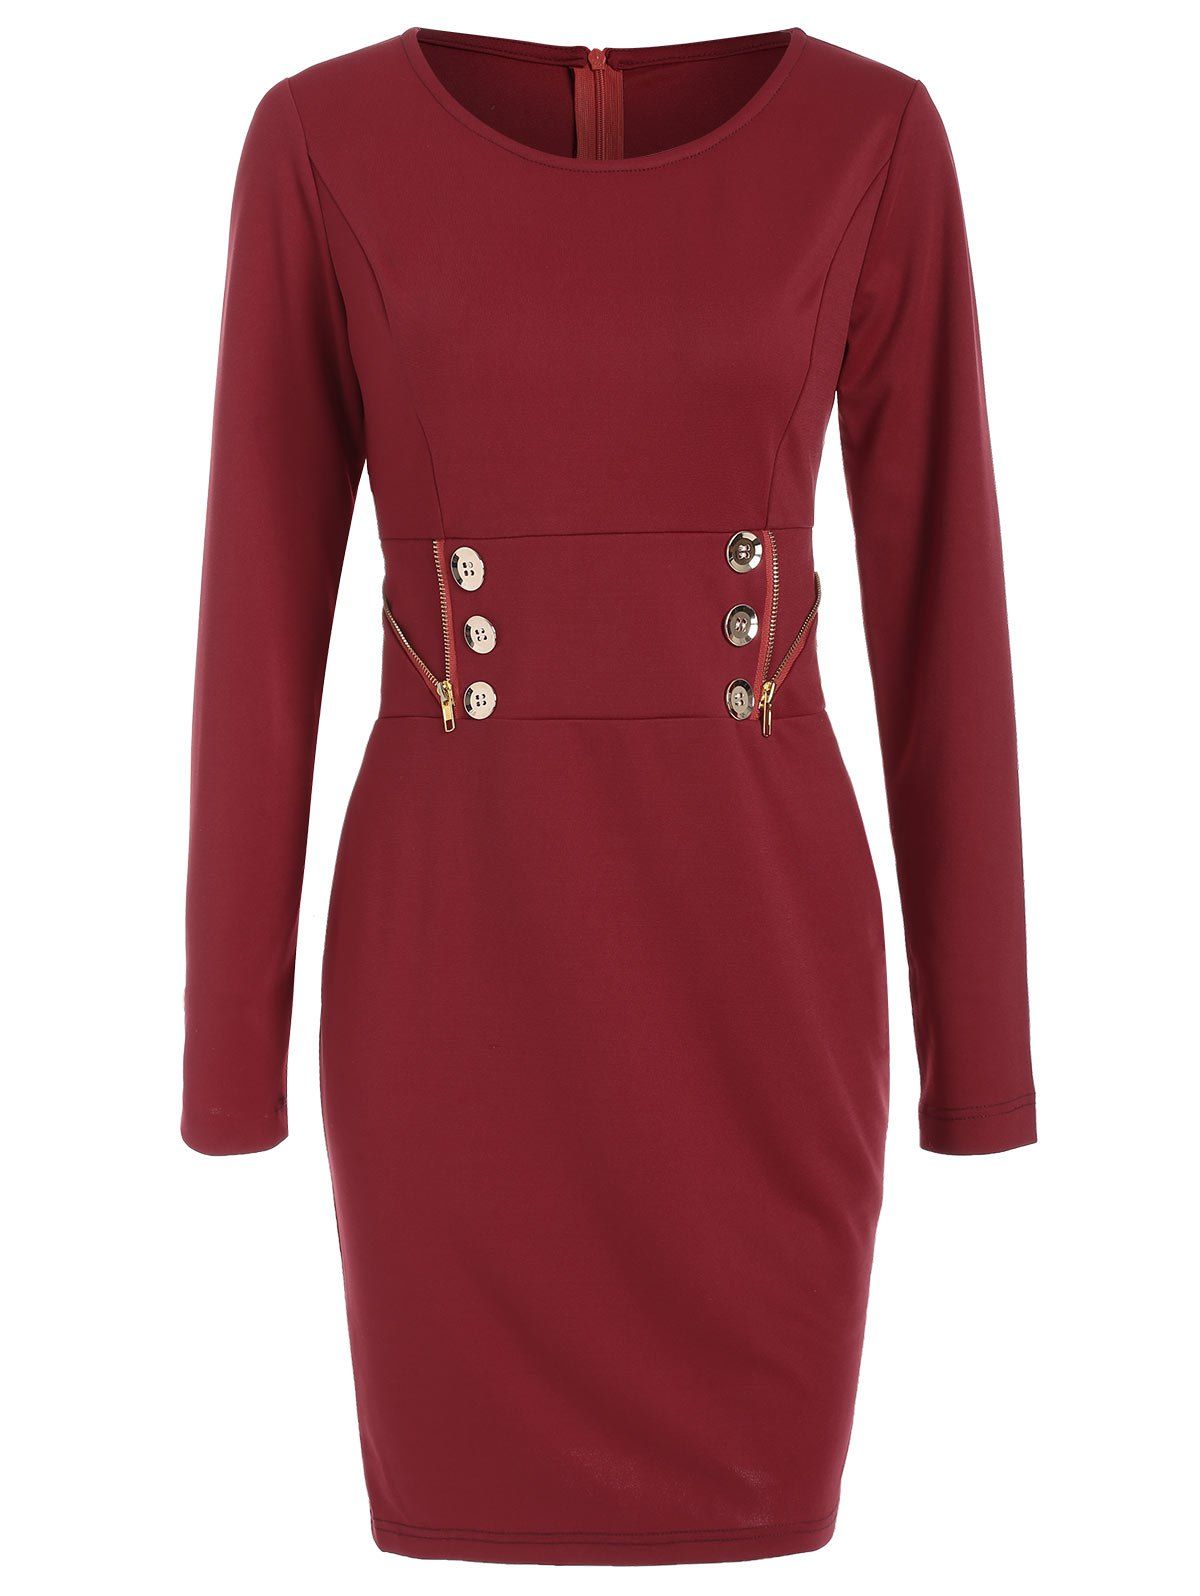 Long Sleeve Zipper Mini Dress - RED WINE XL